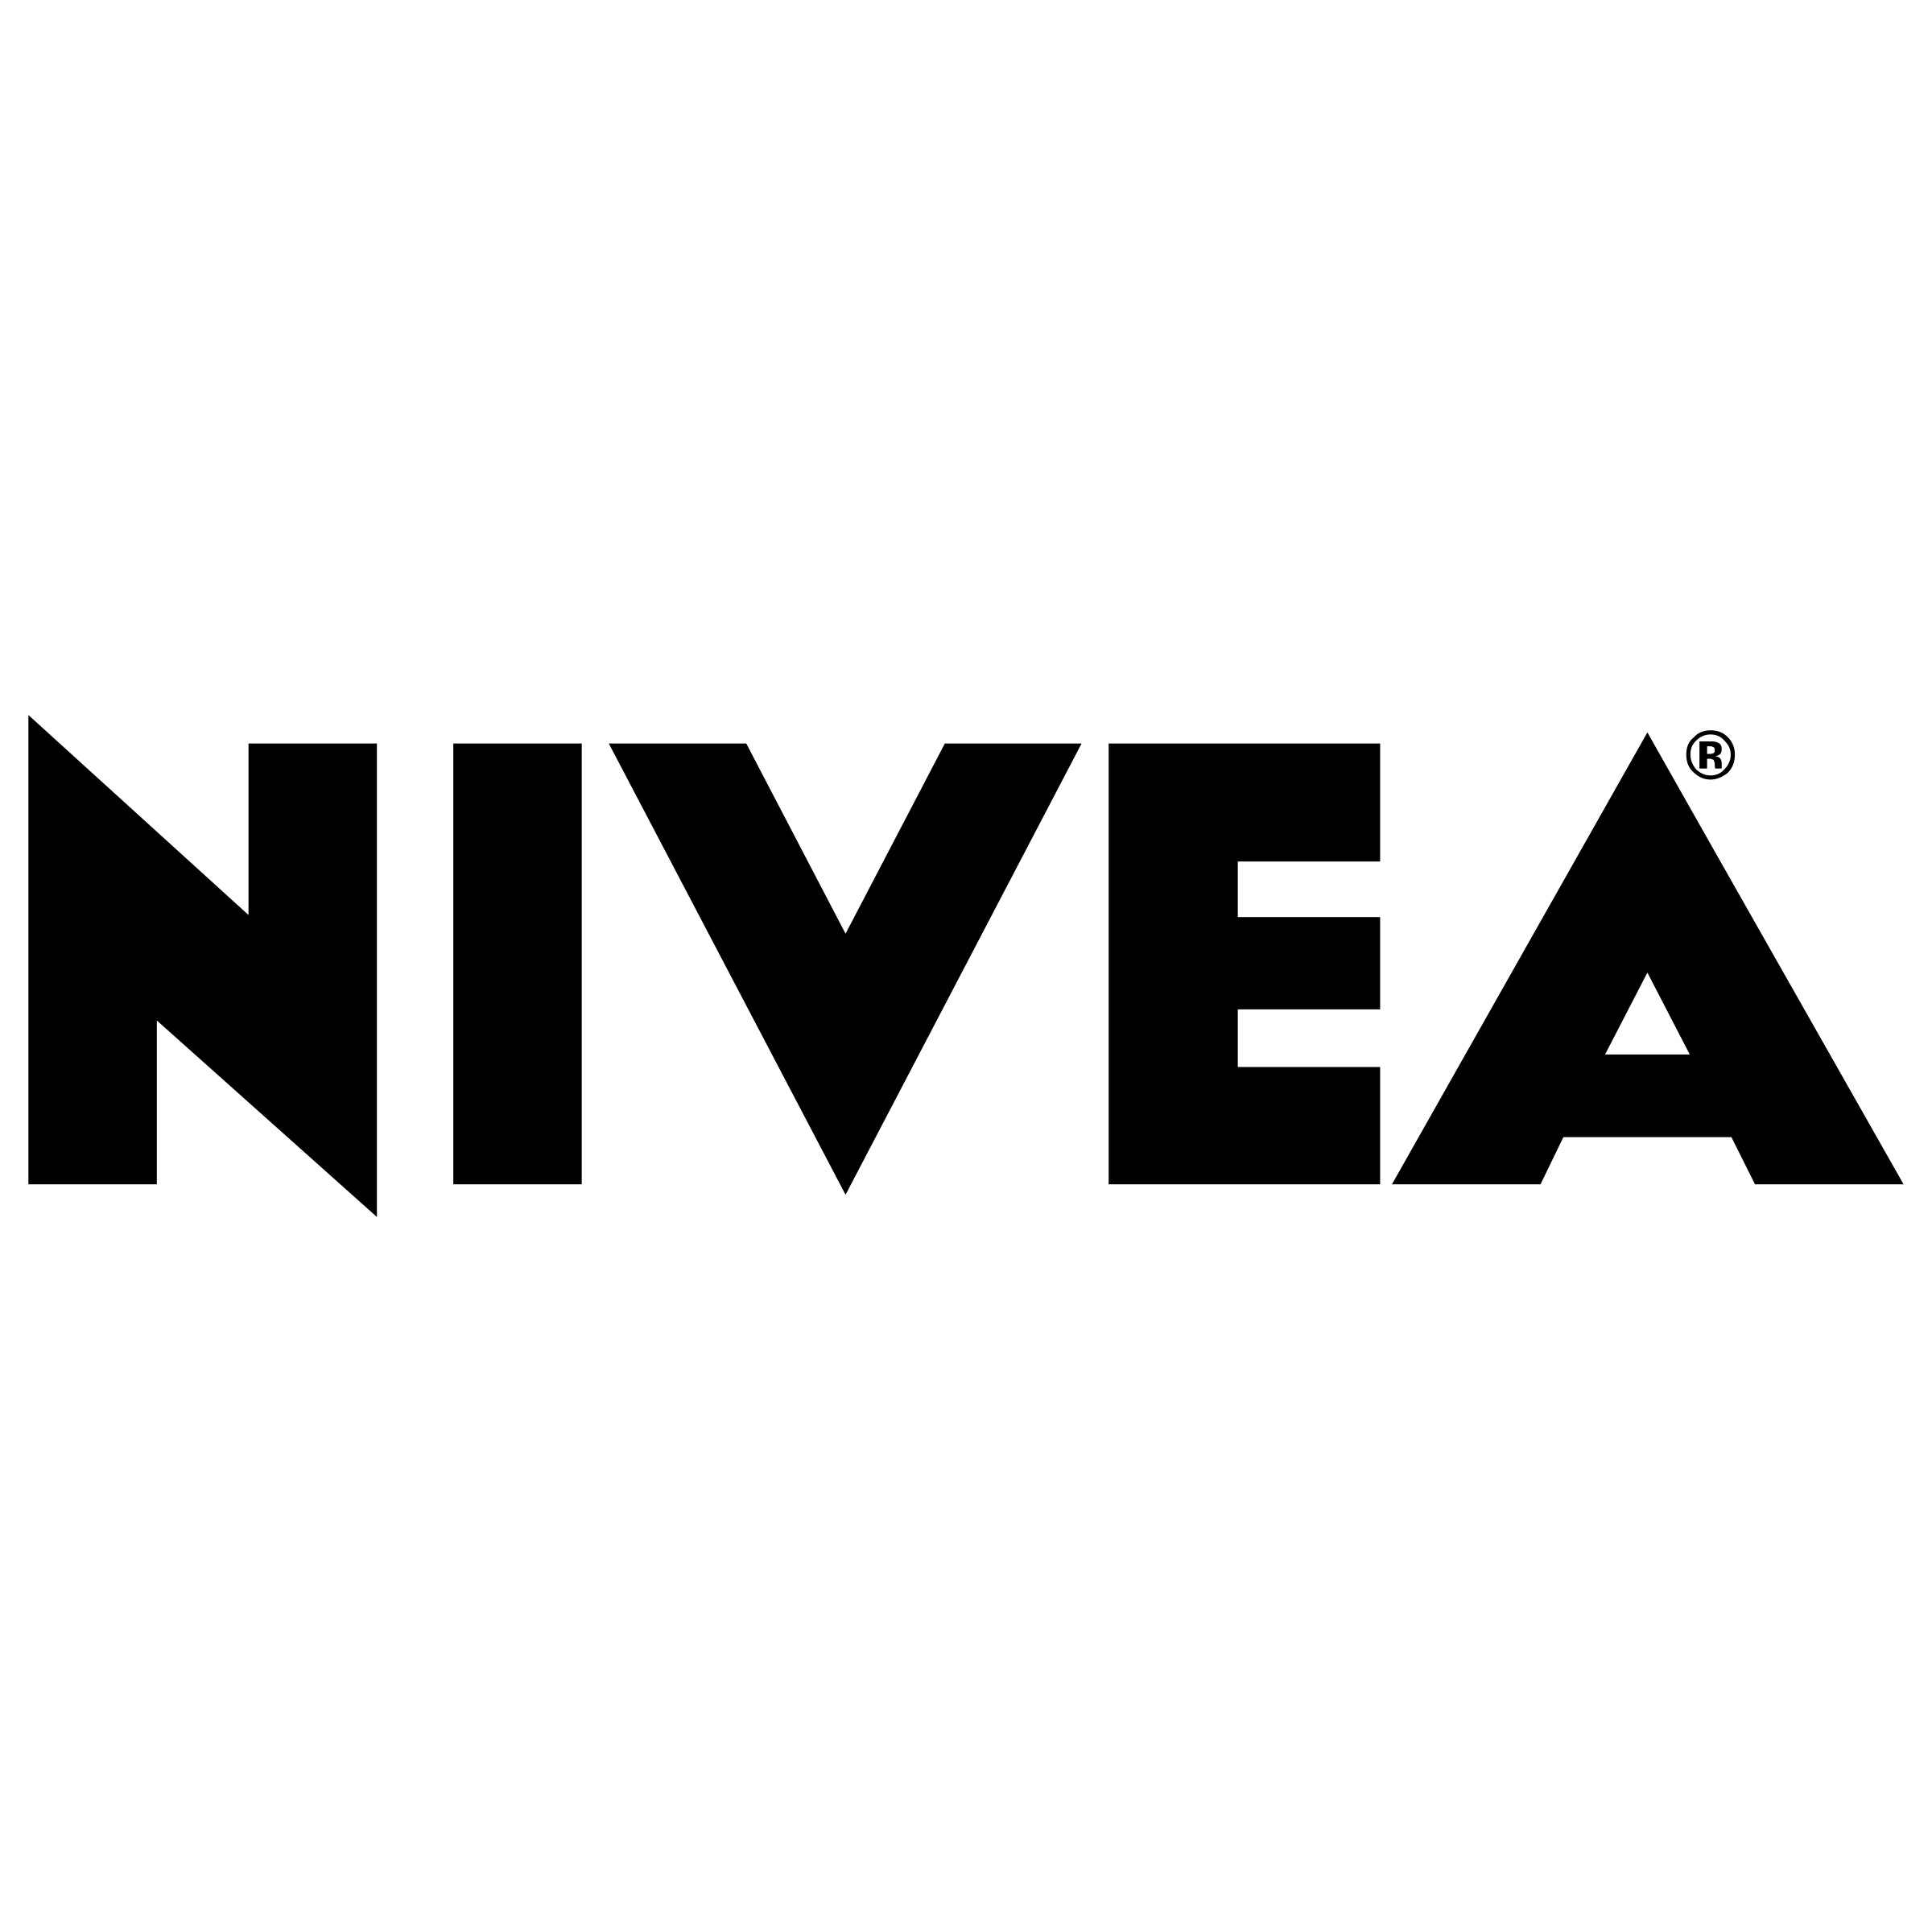 Nivea Logo - Nivea Logo PNG Transparent & SVG Vector - Freebie Supply